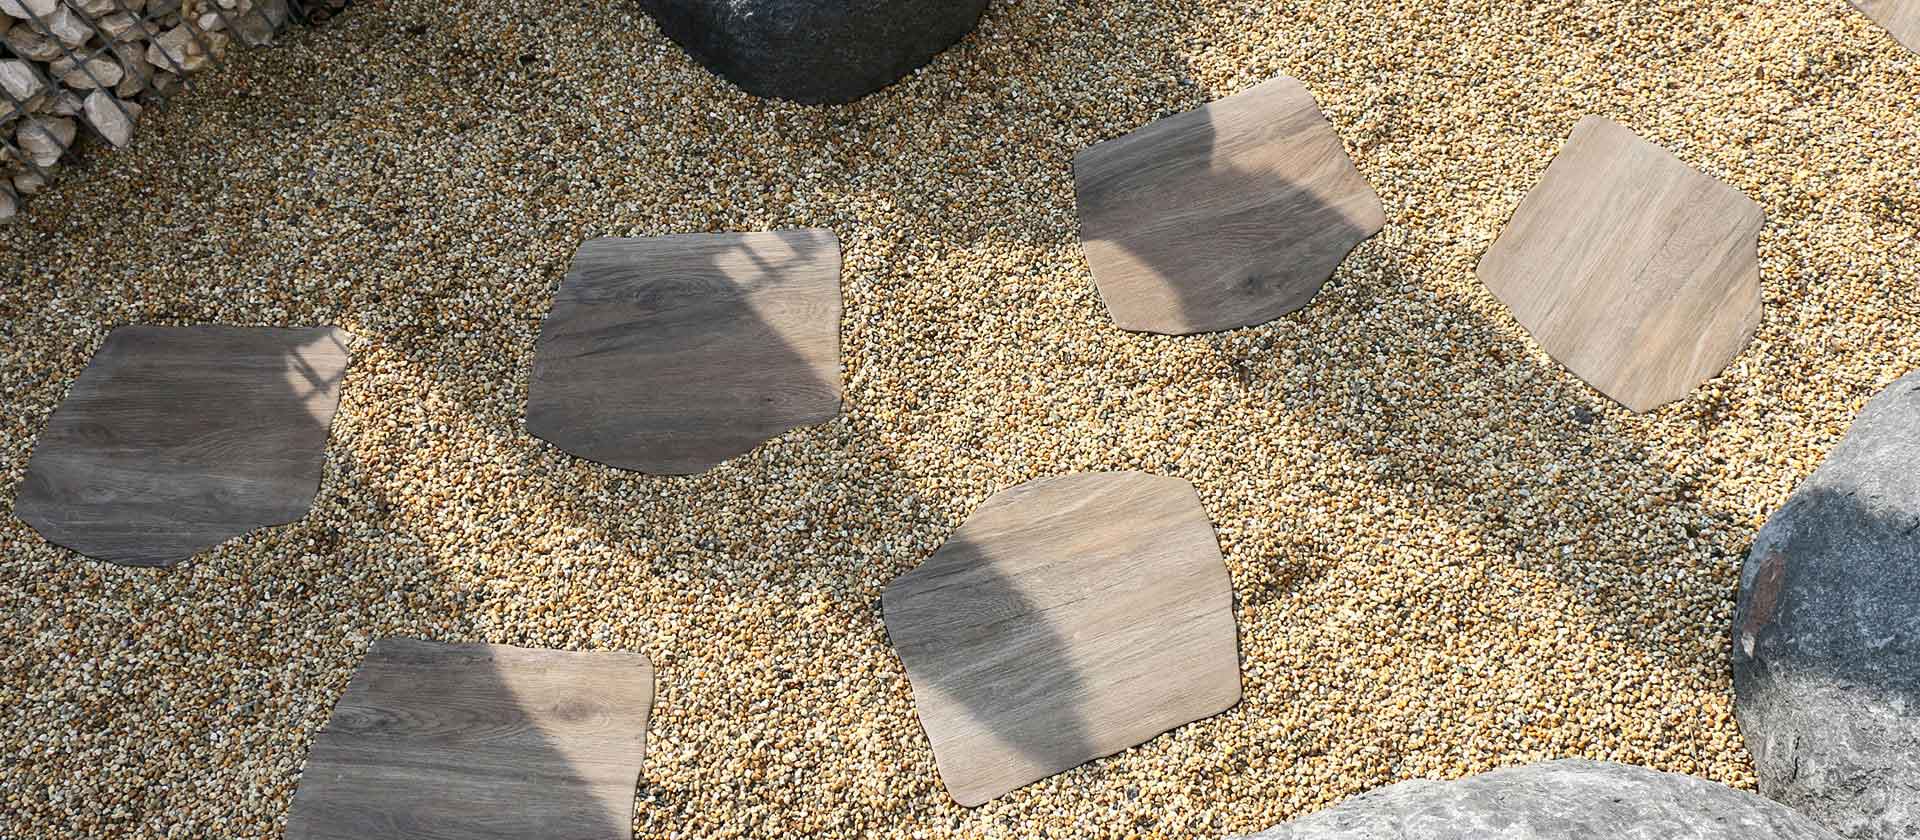 Passo Giapponese Holz Marrone pietra sinterizzata Stone Gres